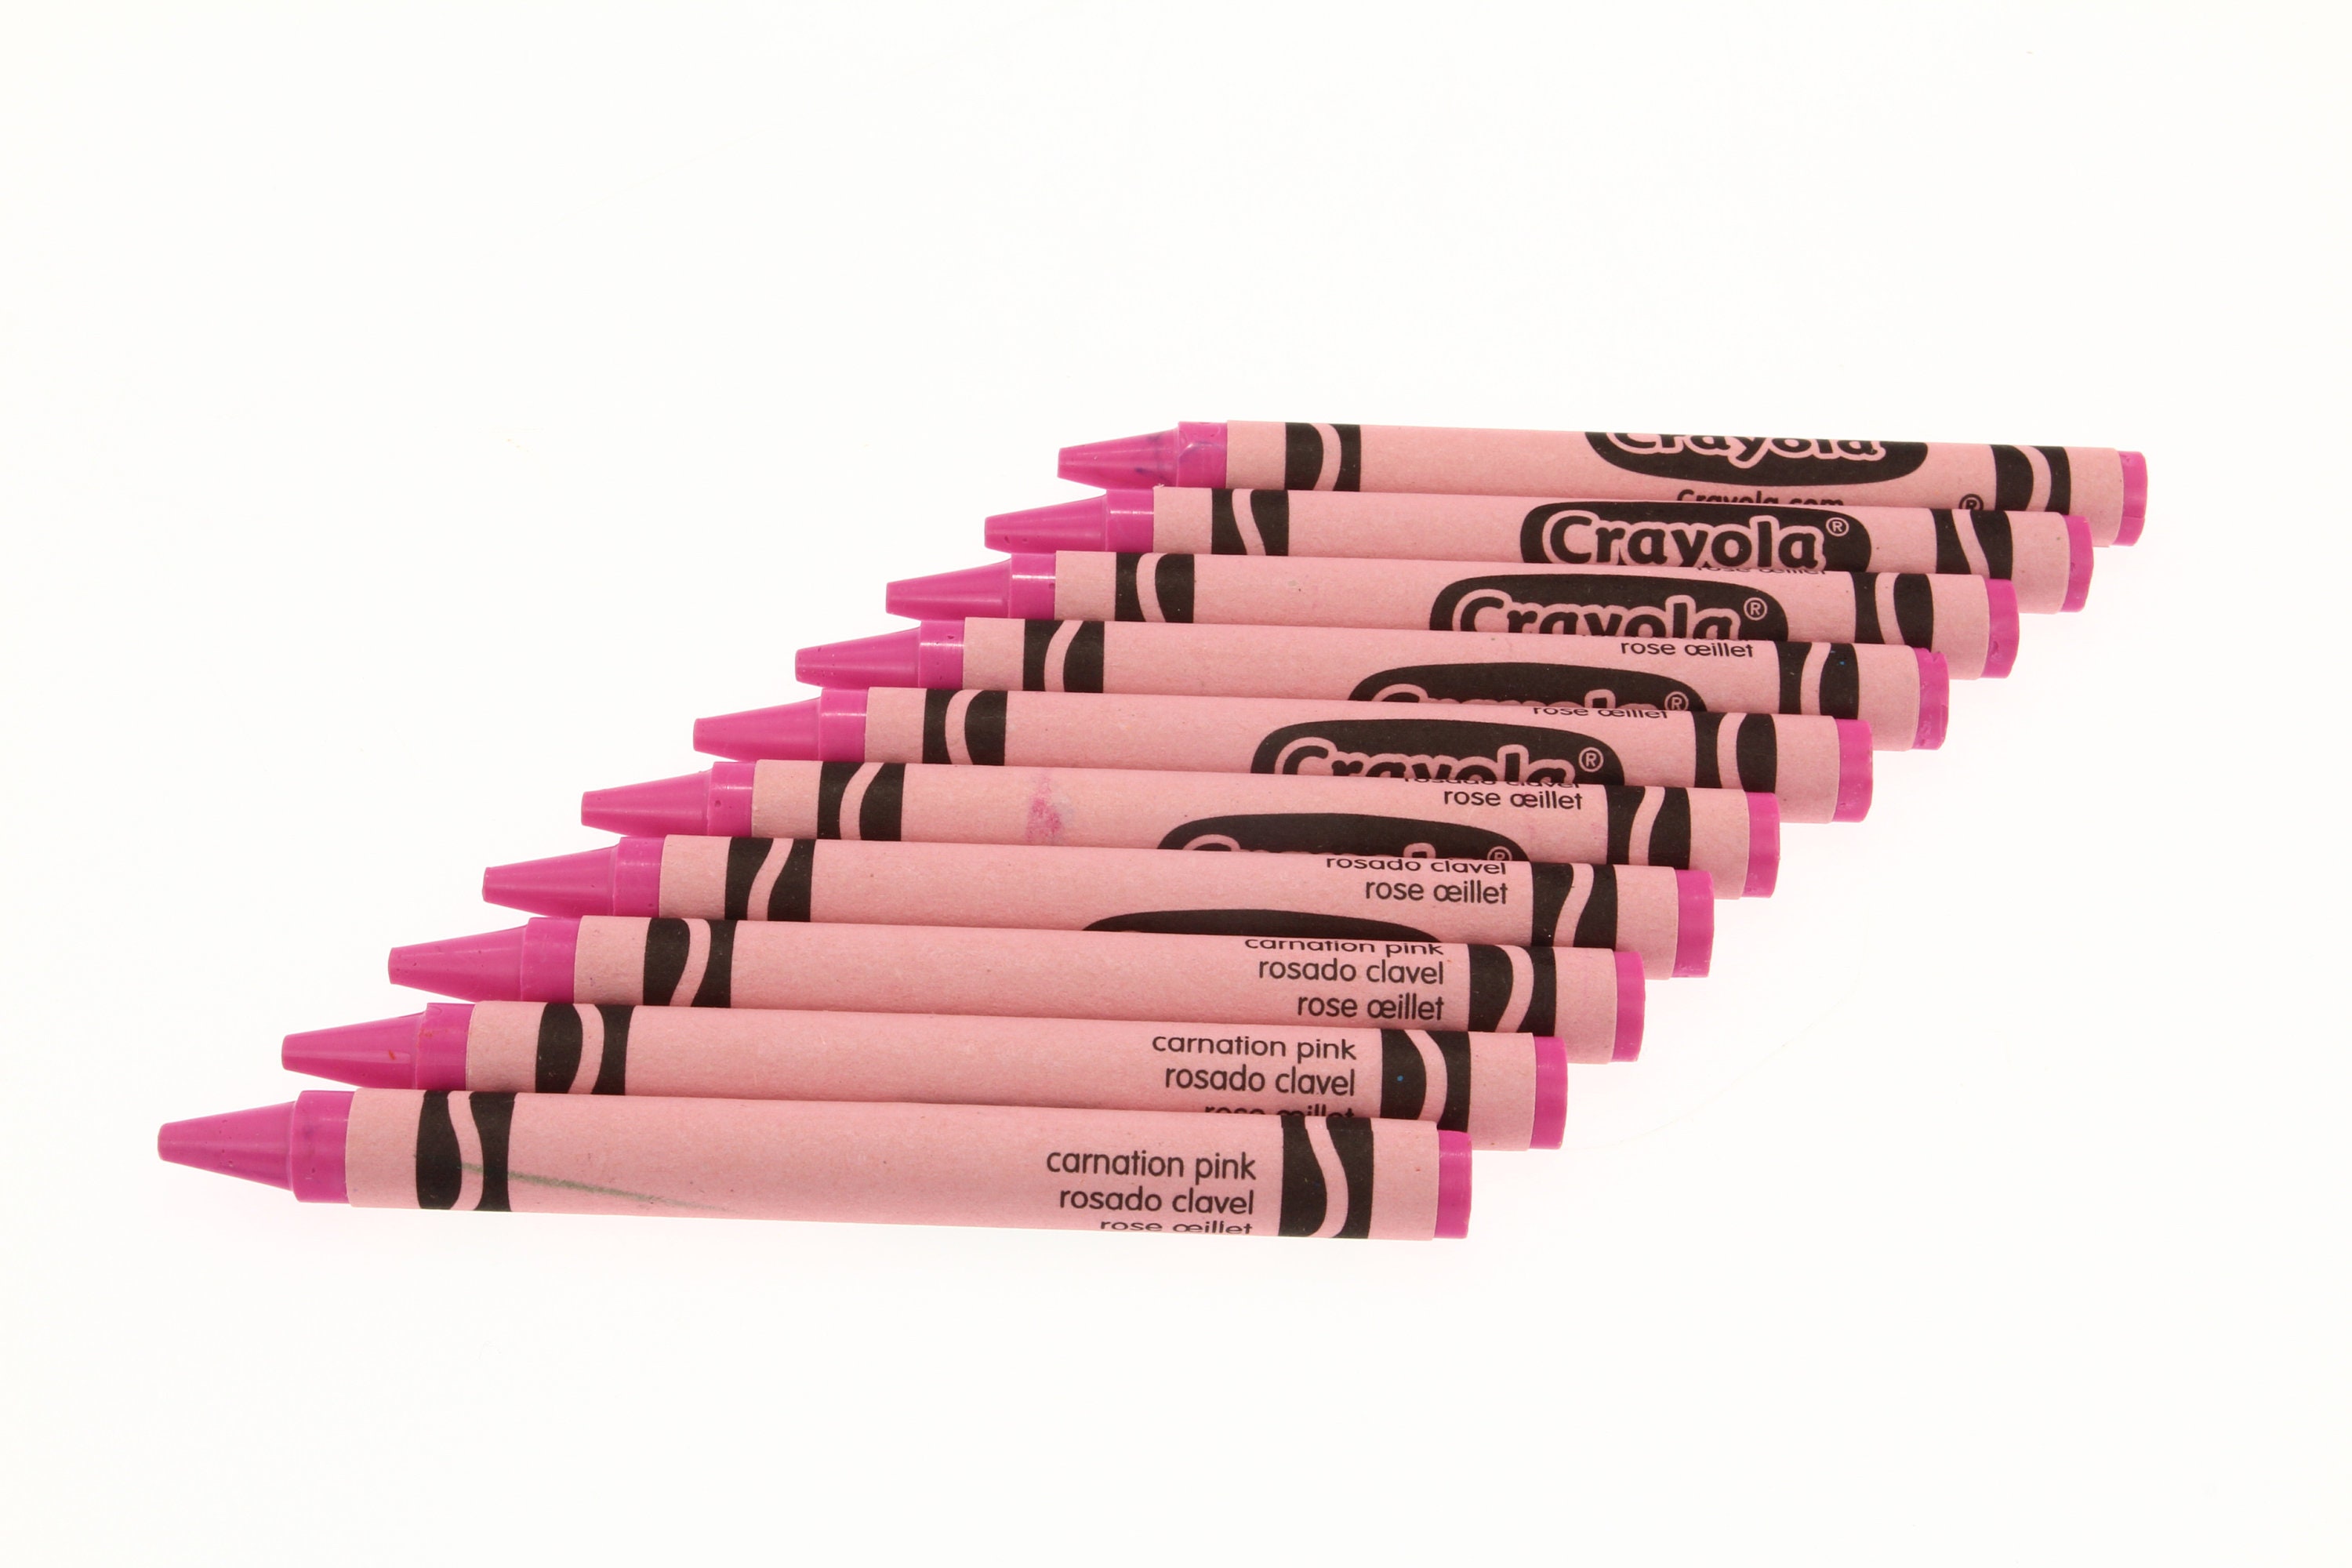 Crayola Crayons $.25 for Box of 24 - Birthday Favor Idea